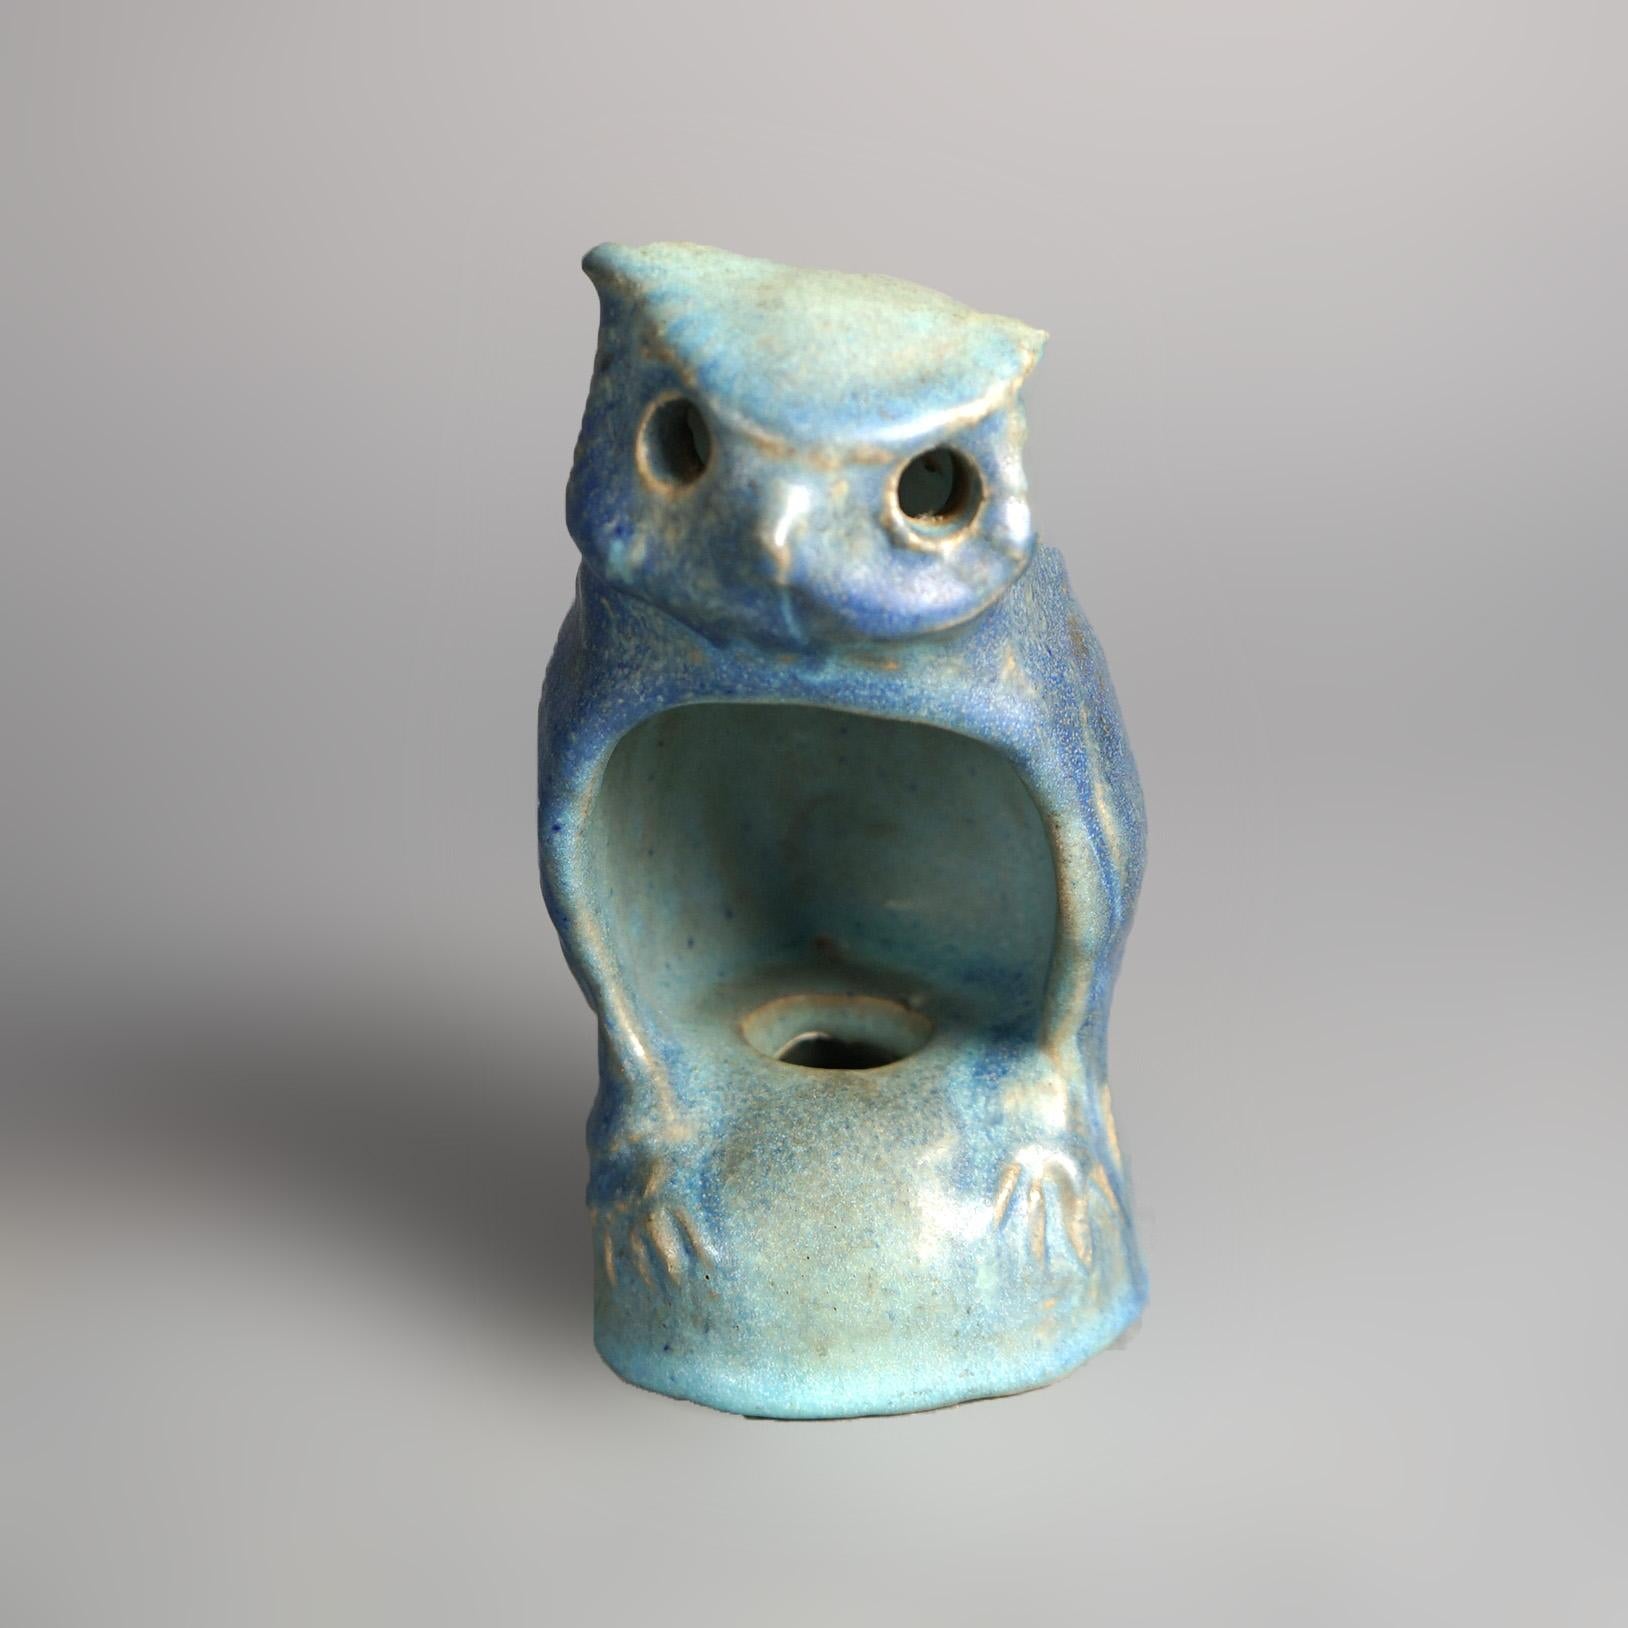 Antique Arts & Crafts Van Briggle Figural & Handled Art Pottery Owl Night Light C1920

Measures - 6.25